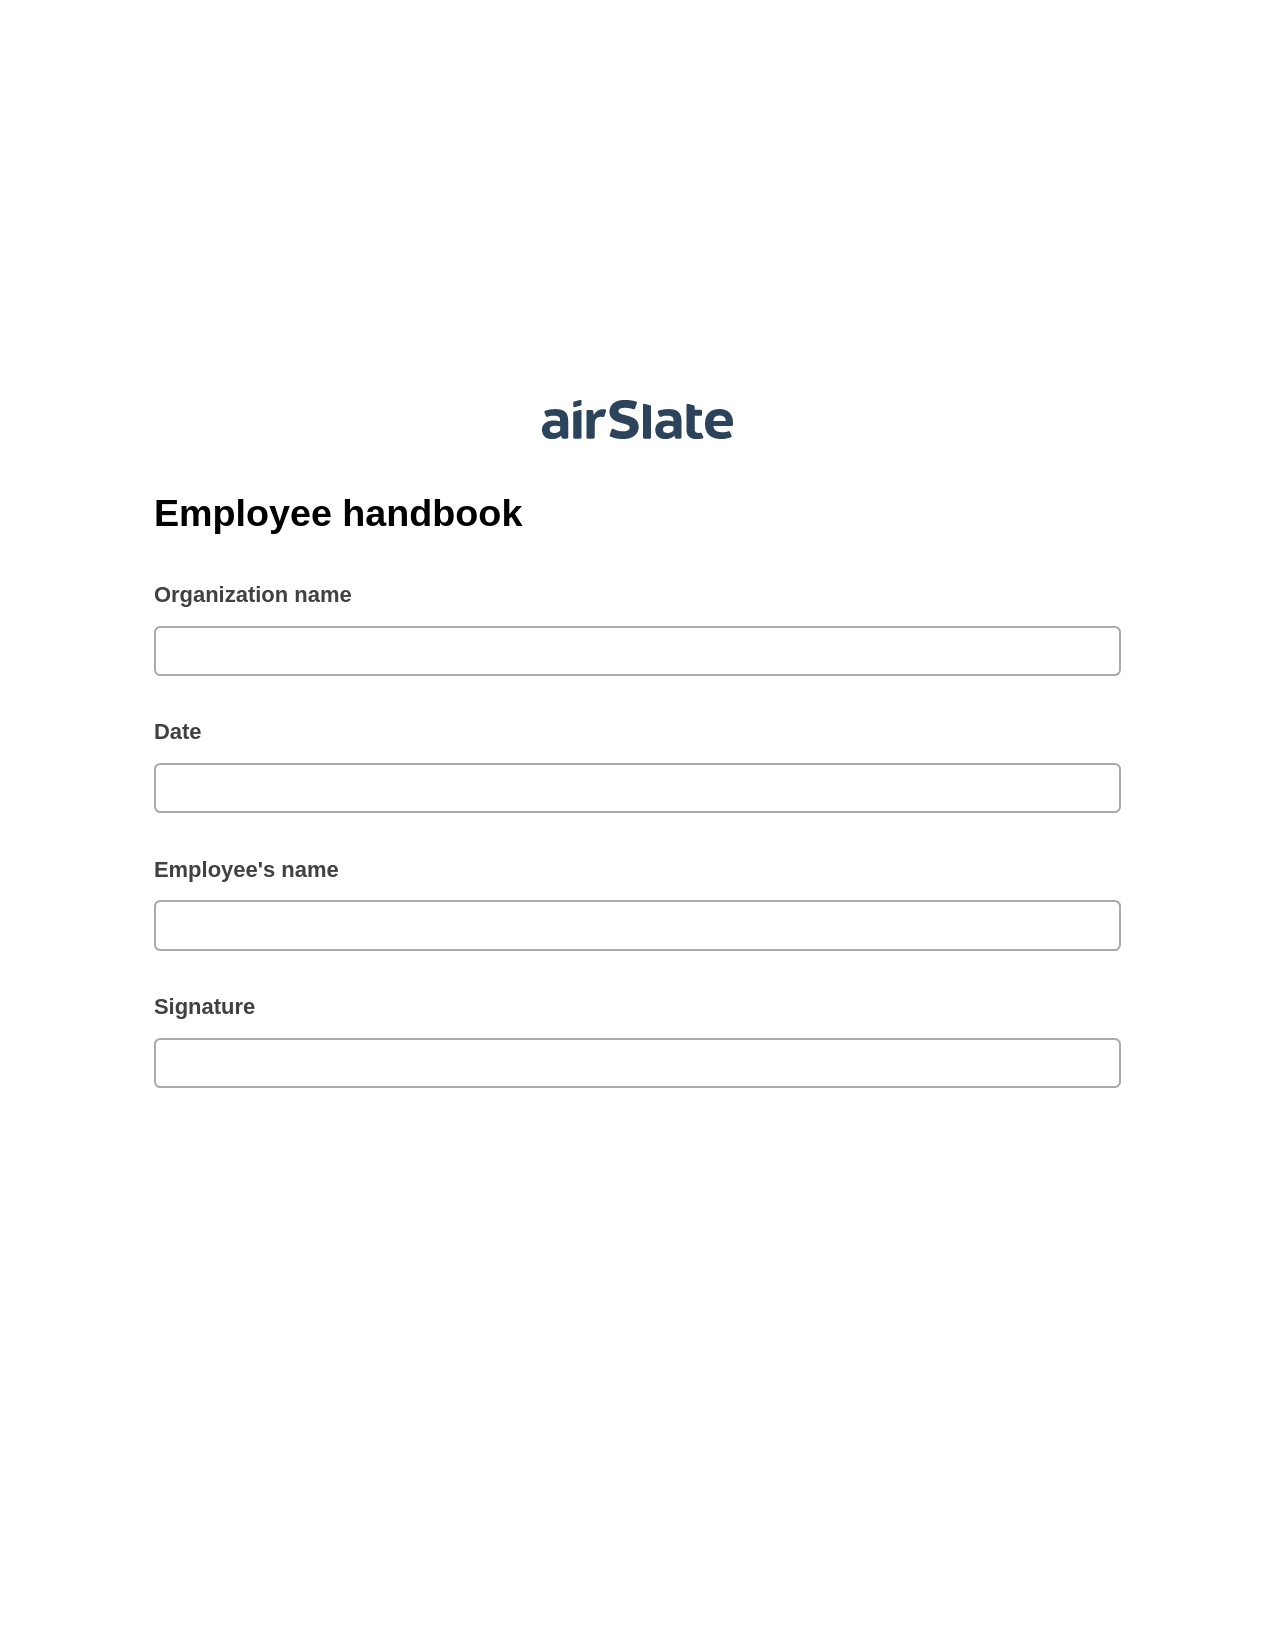 Multirole Employee handbook Pre-fill from Salesforce Records with SOQL Bot, Slack Notification Bot, Slack Two-Way Binding Bot